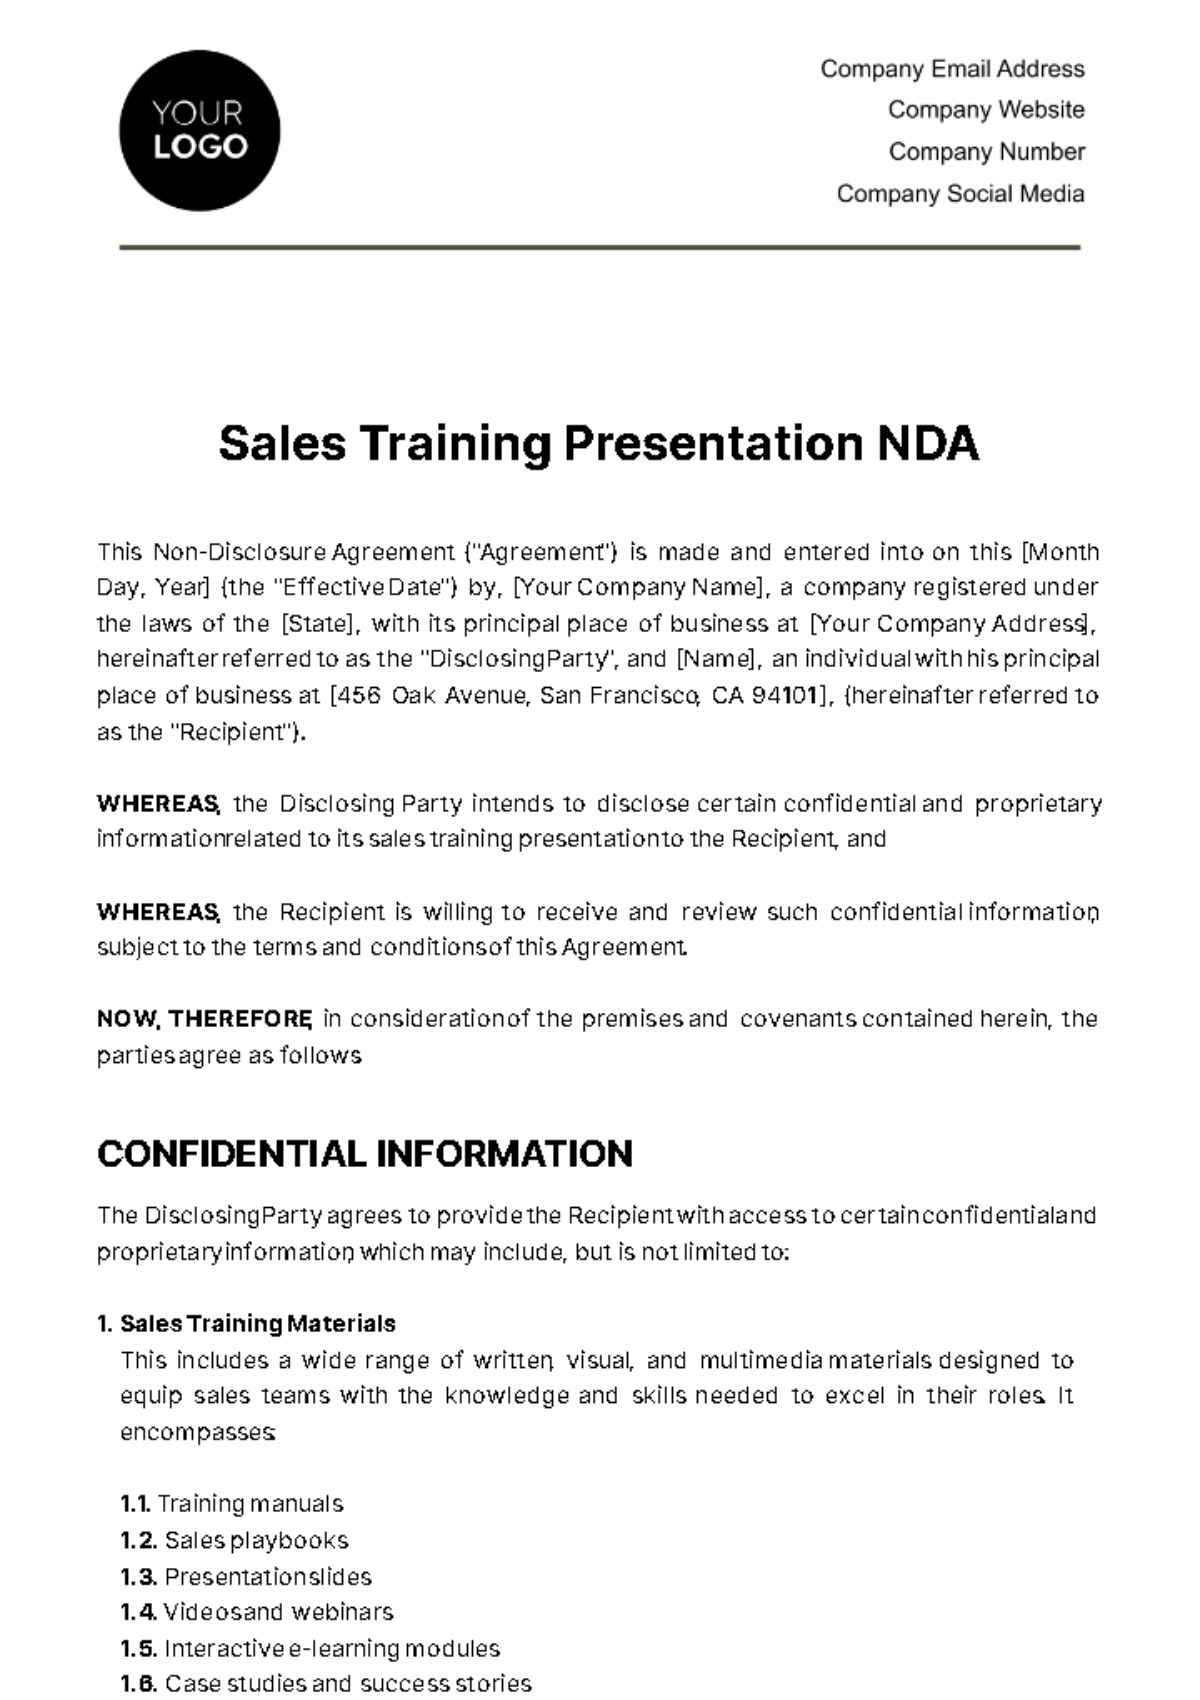 Sales Training Presentation NDA Template